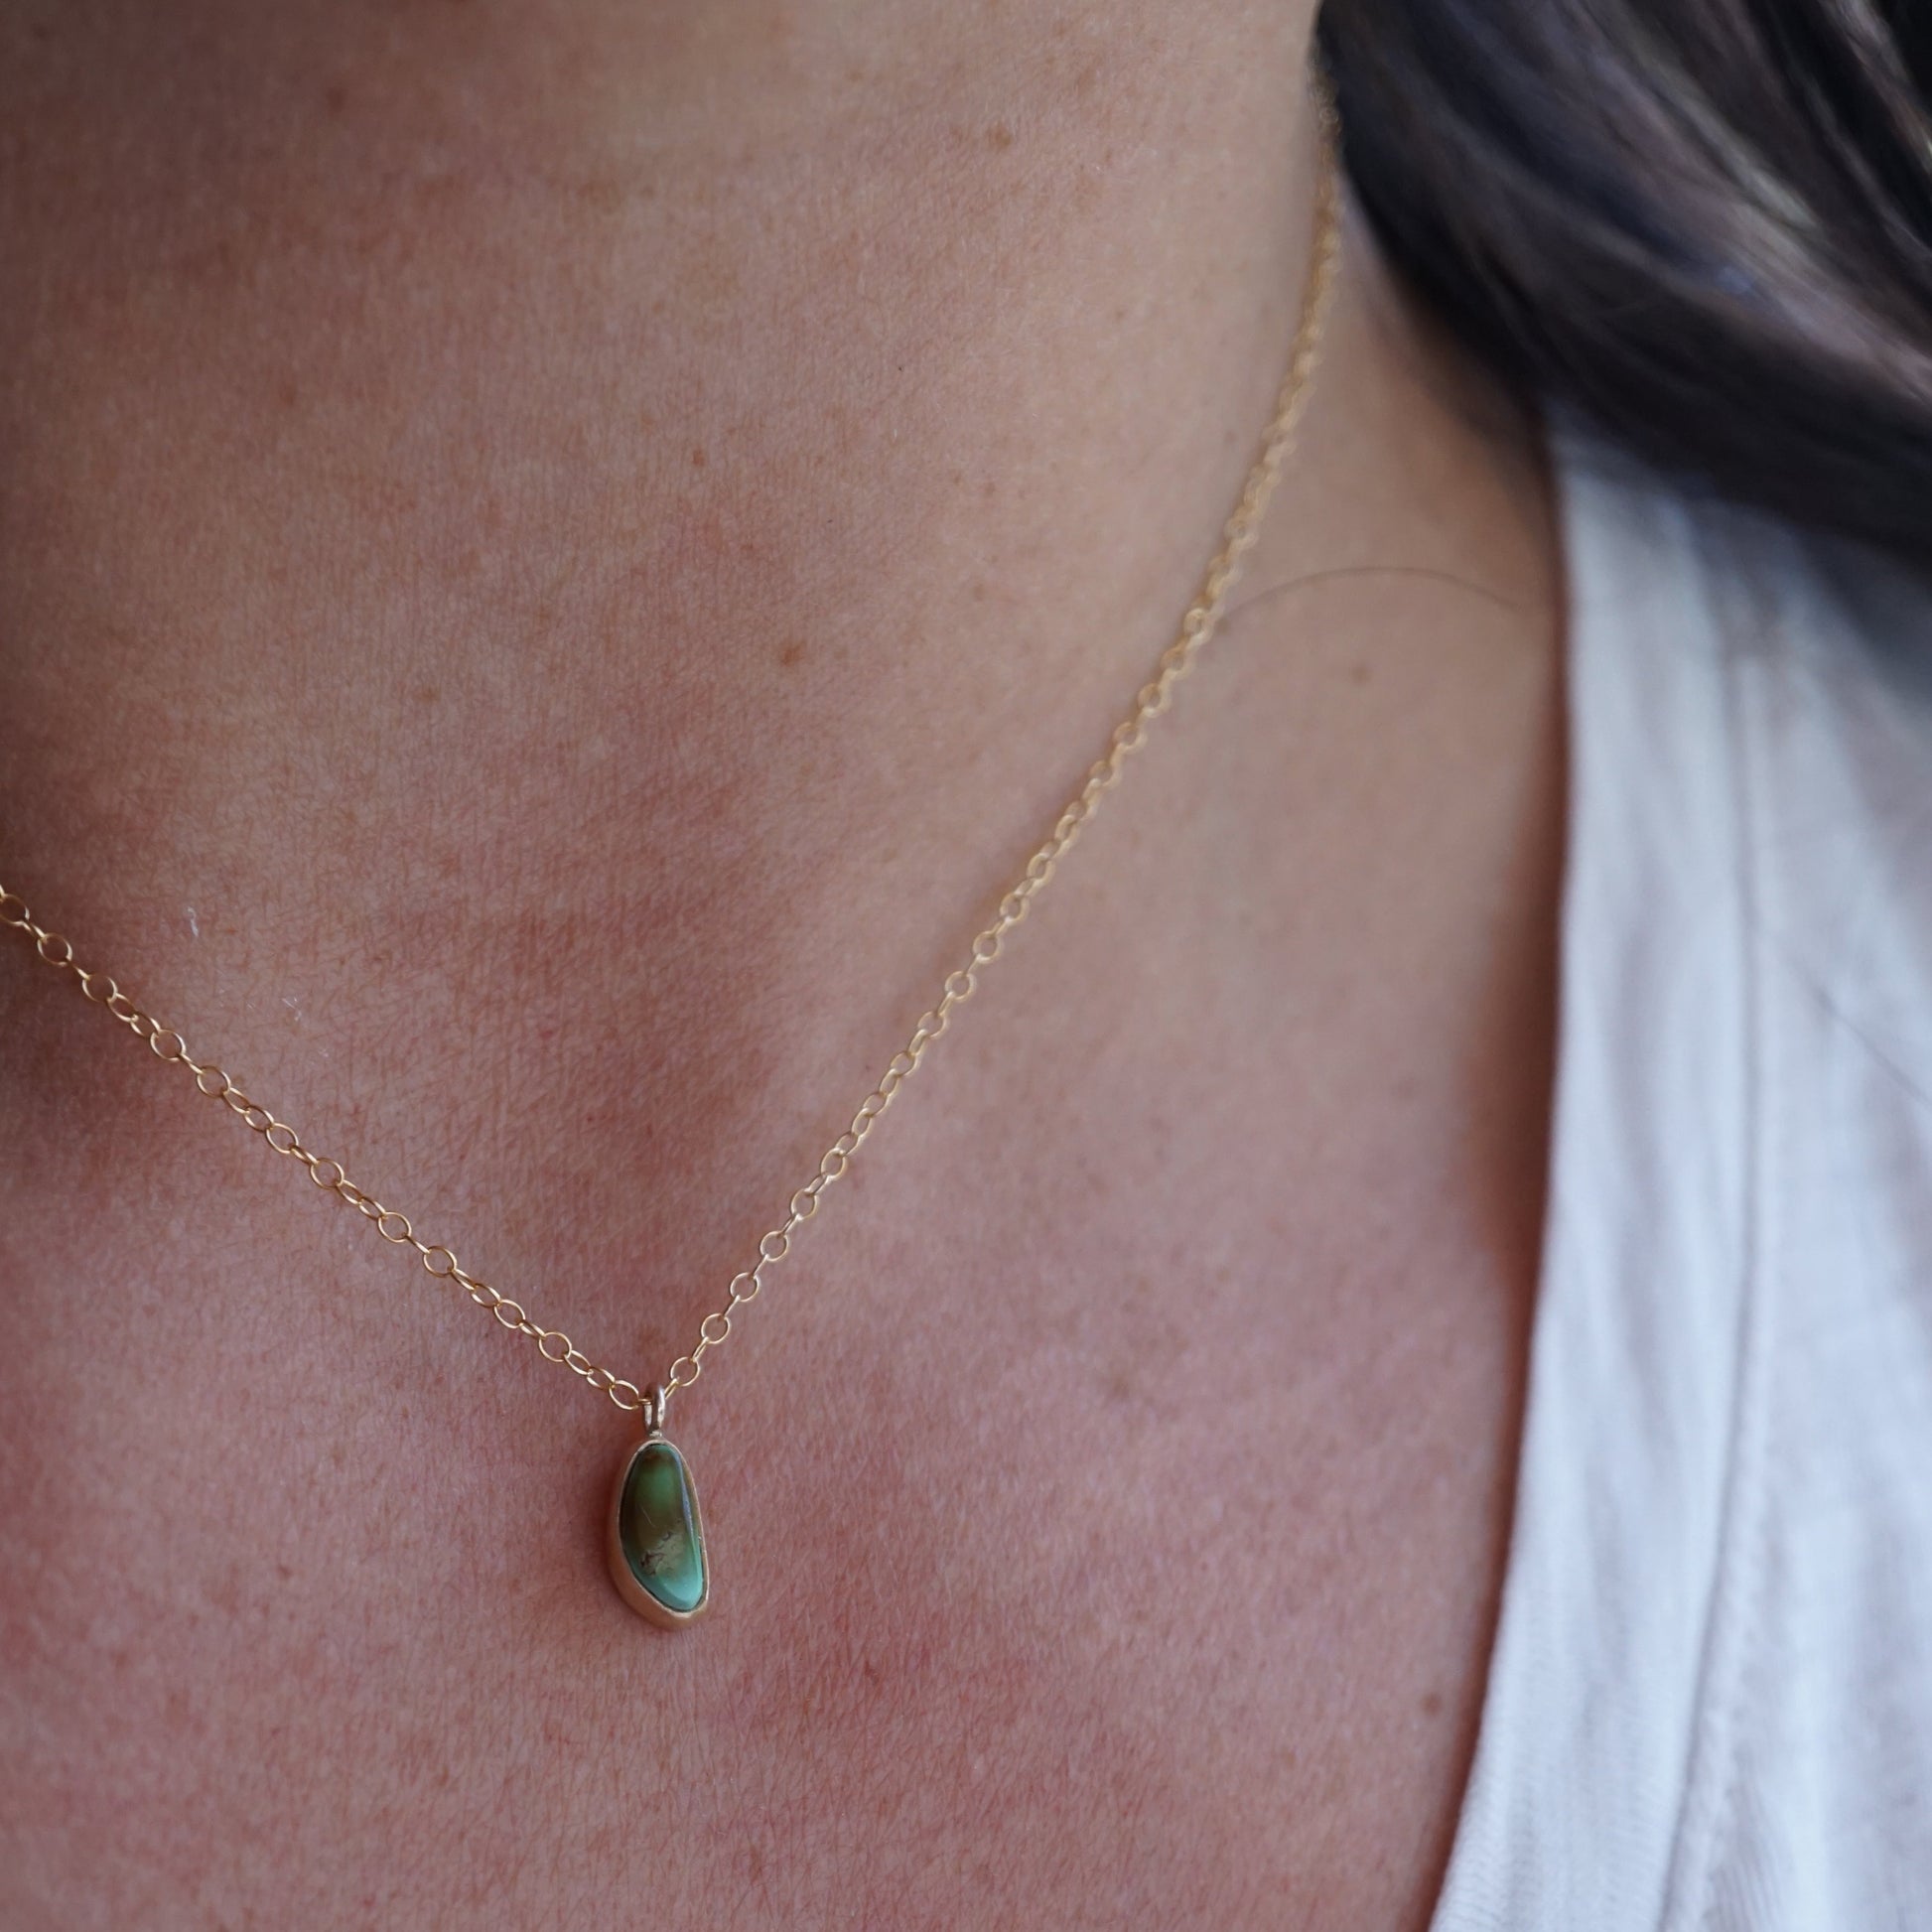 teeny tiny ombre royston turquoise + 14k goldfill necklace - Lumenrose